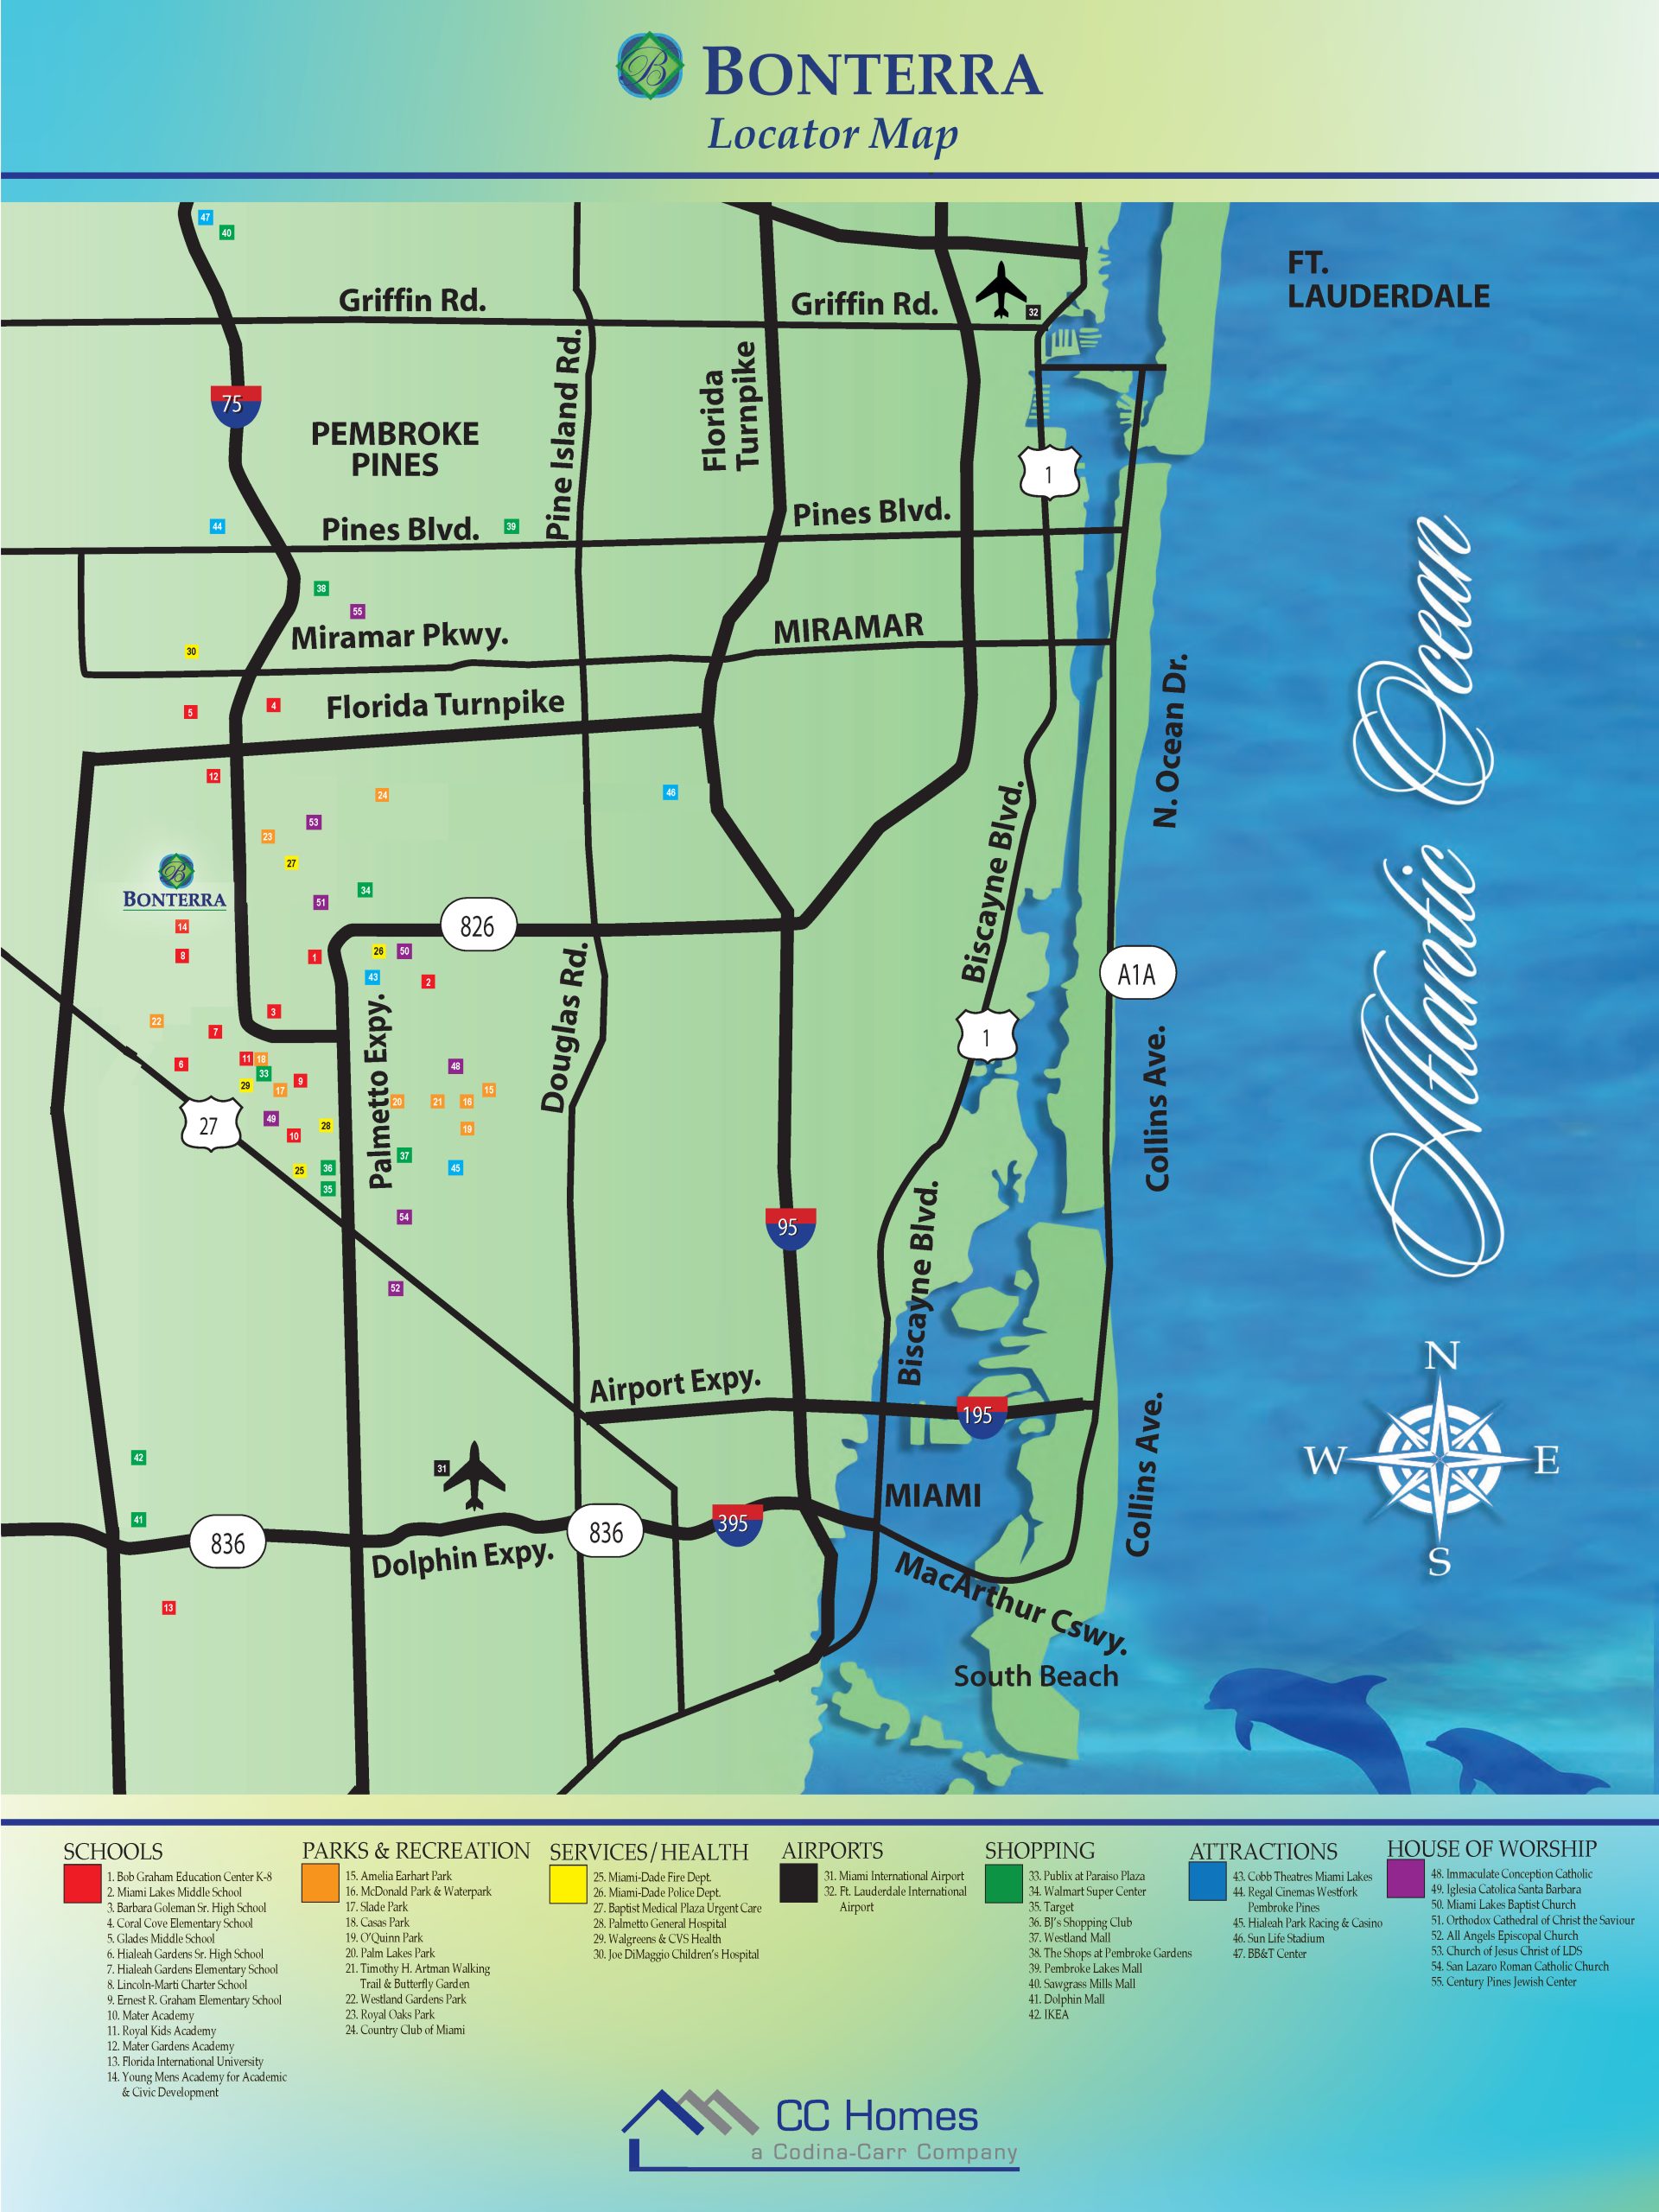 Bonterra: A Hot, New Community Hits the South Florida Map! - CC Homes